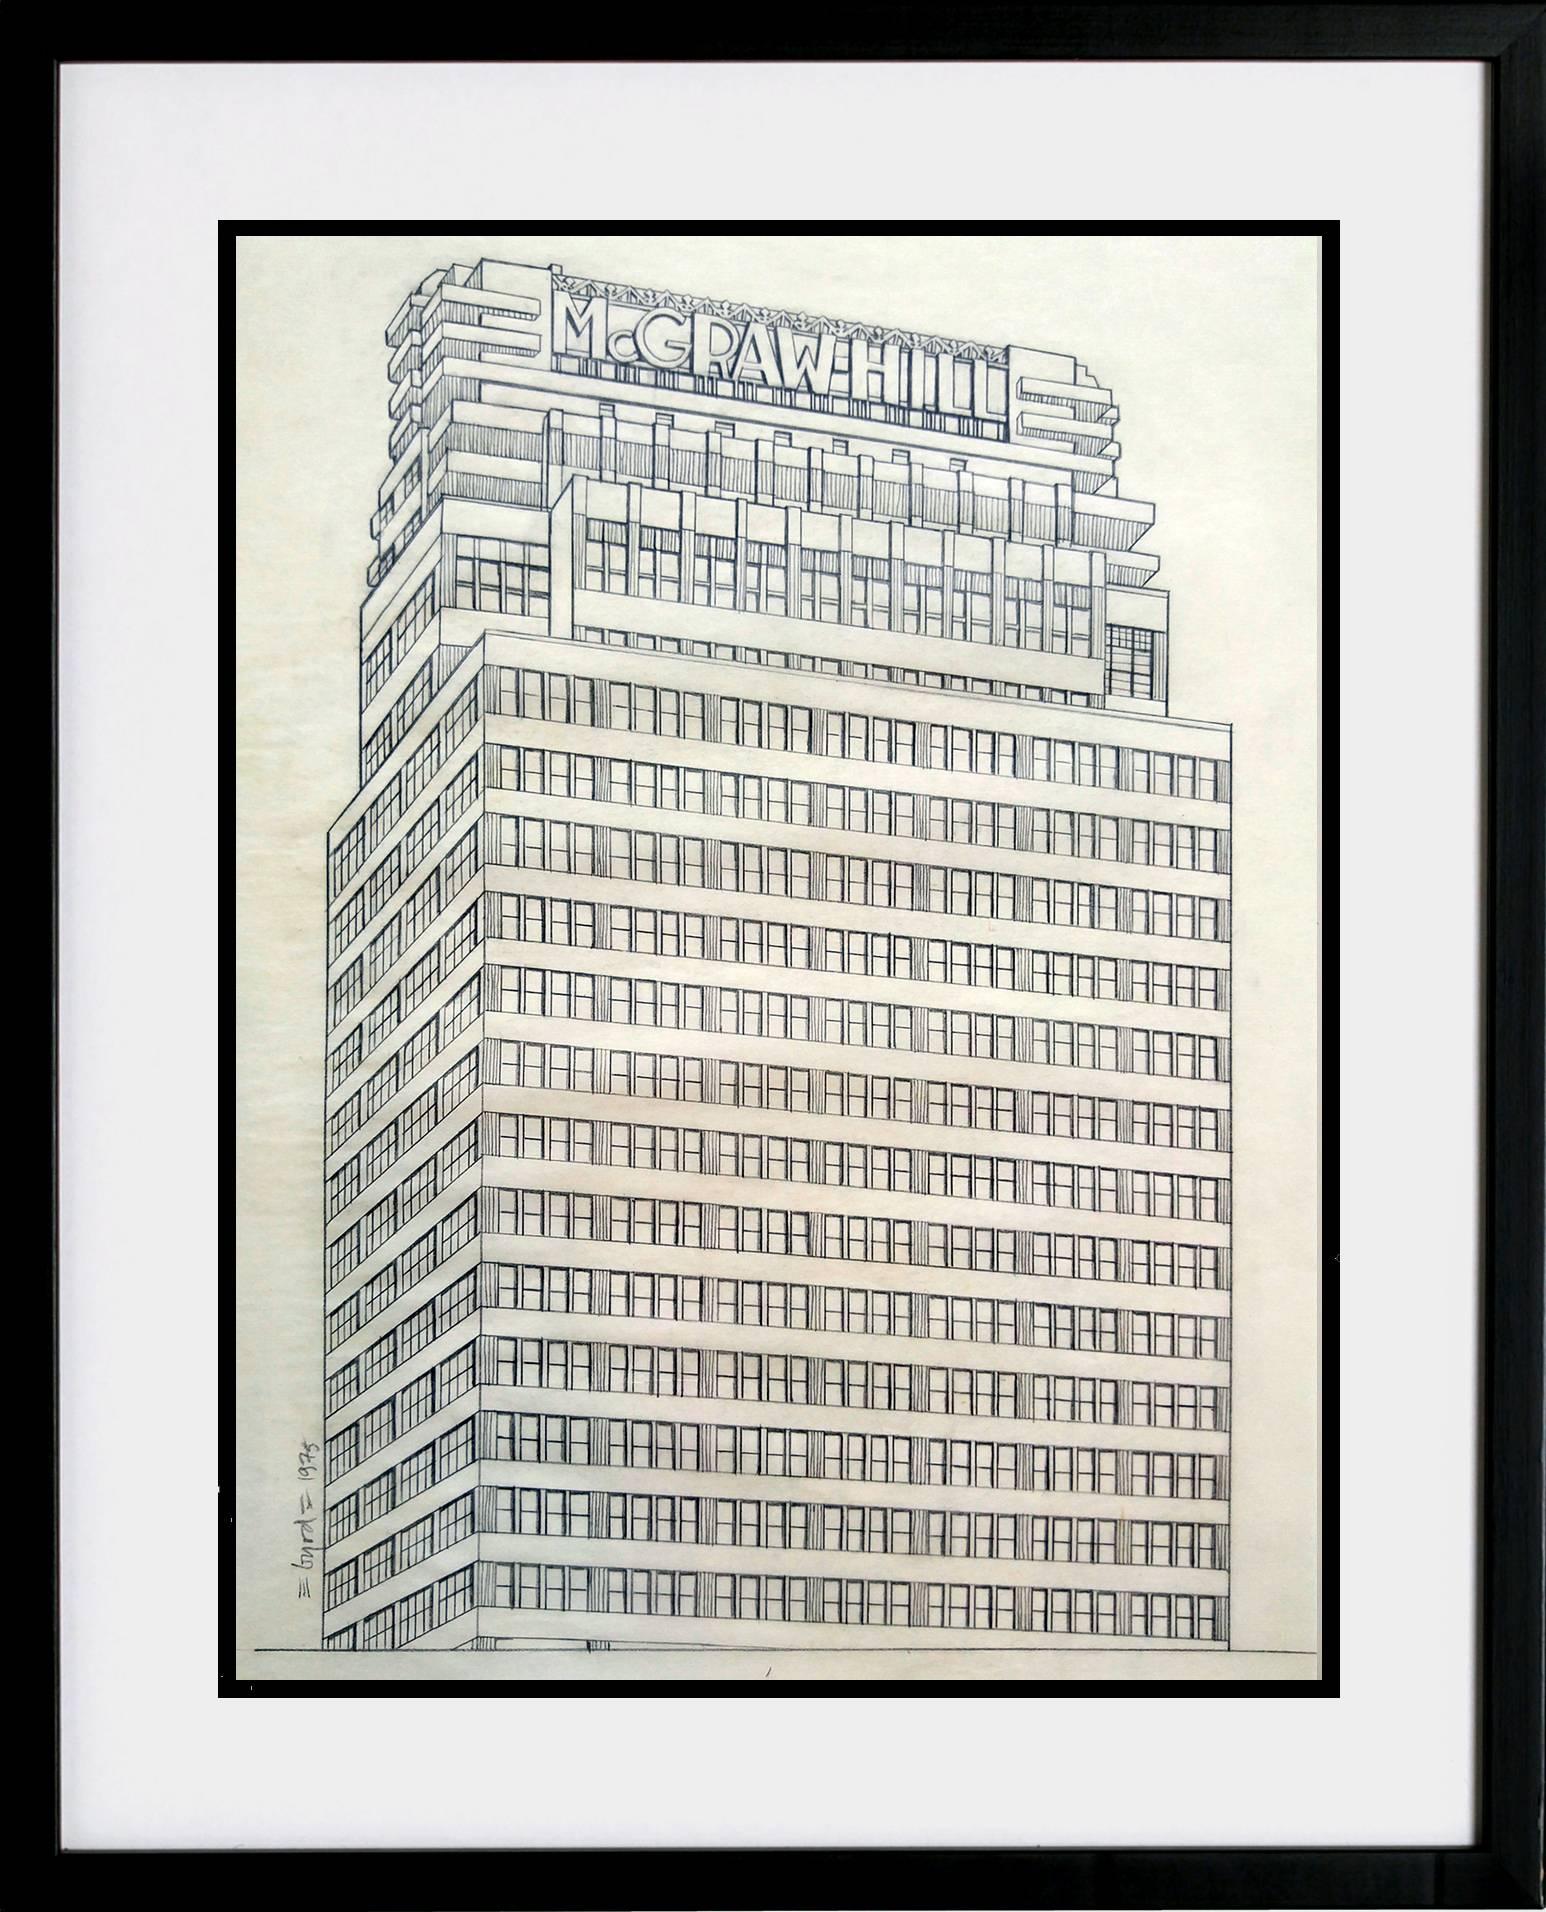 McGraw-Hill Building West 42 Street, Pencil on Vellum,